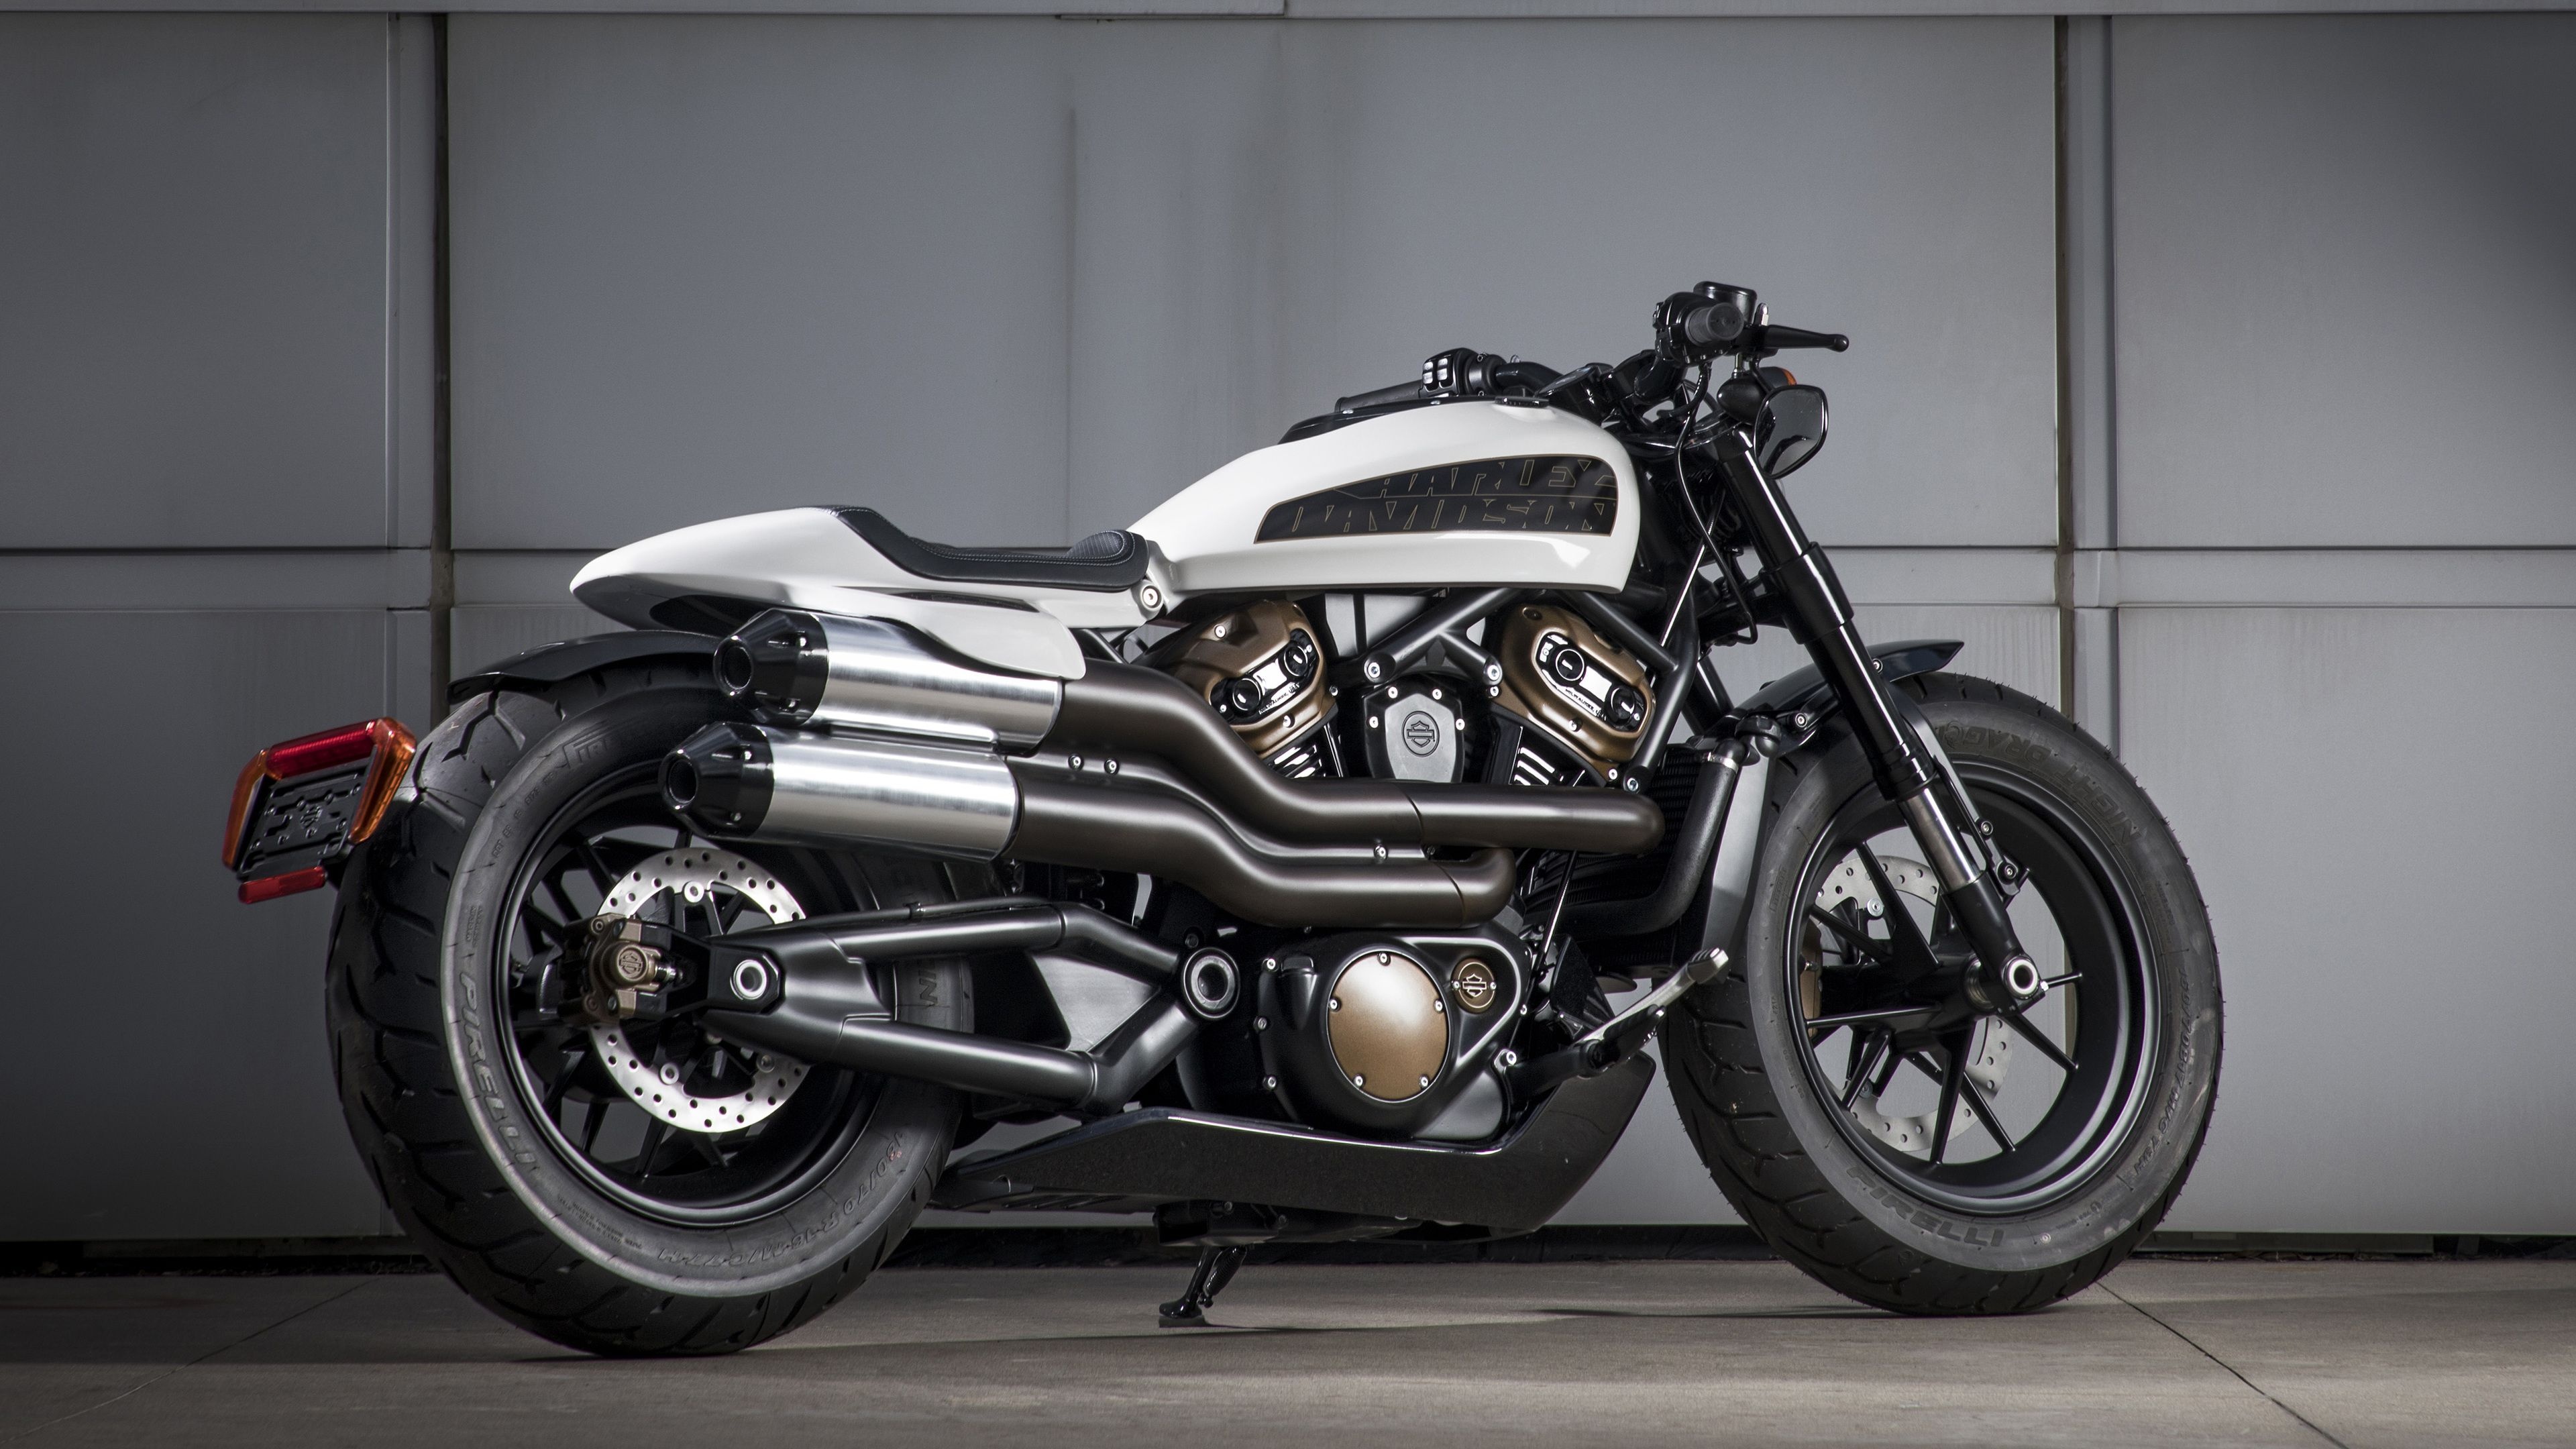 Harley Bikes (Auto), Harley Davidson bikes, Adrenaline rush, 3840x2160 4K Desktop